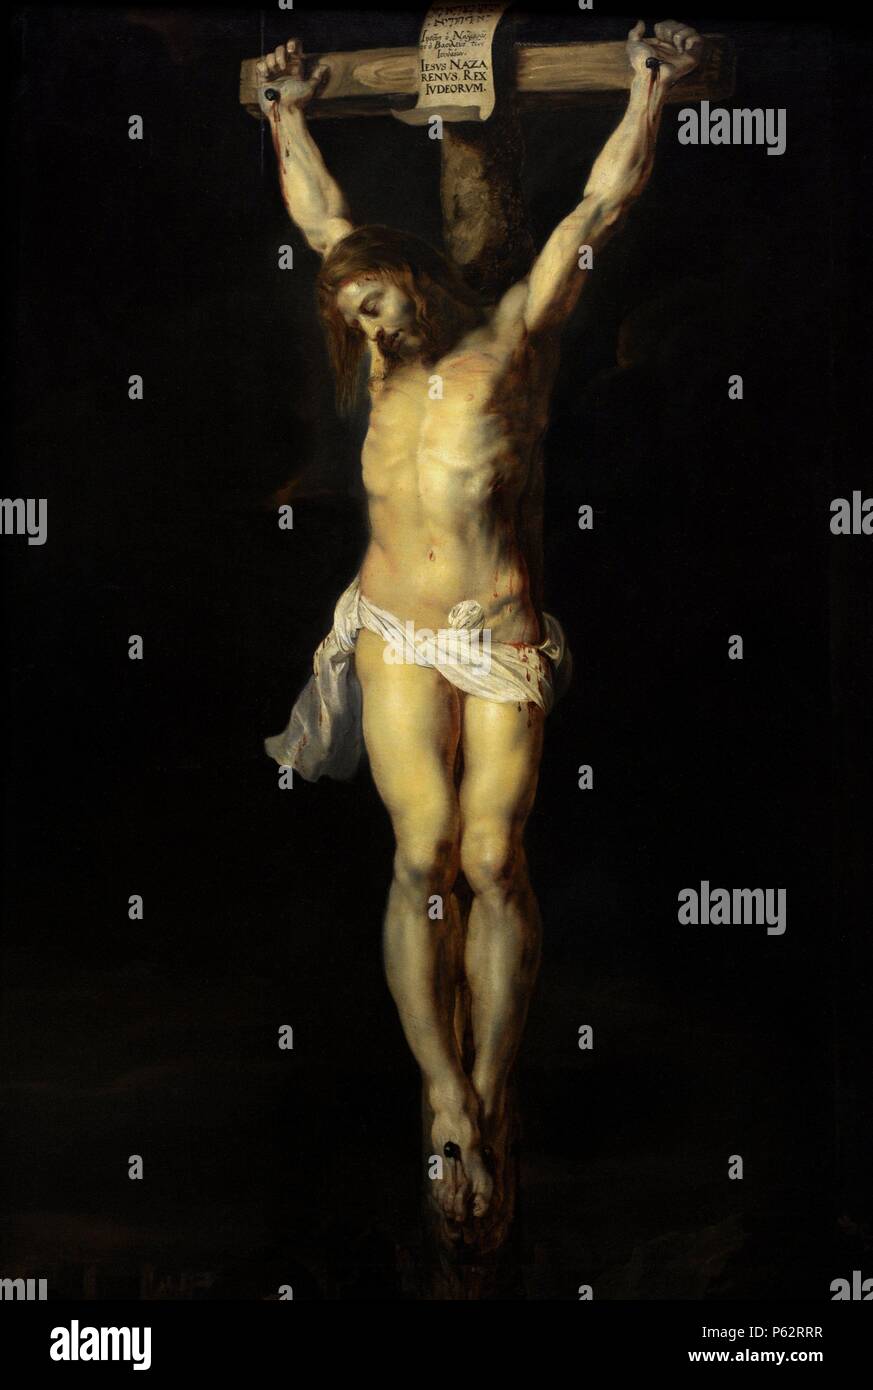 Peter Paul Rubens (1577-1640). Nacida en Alemania, pintor barroco flamenco. La crucifixión,1614. Pinakothek. Detalle. Munich. Alemania. Foto de stock